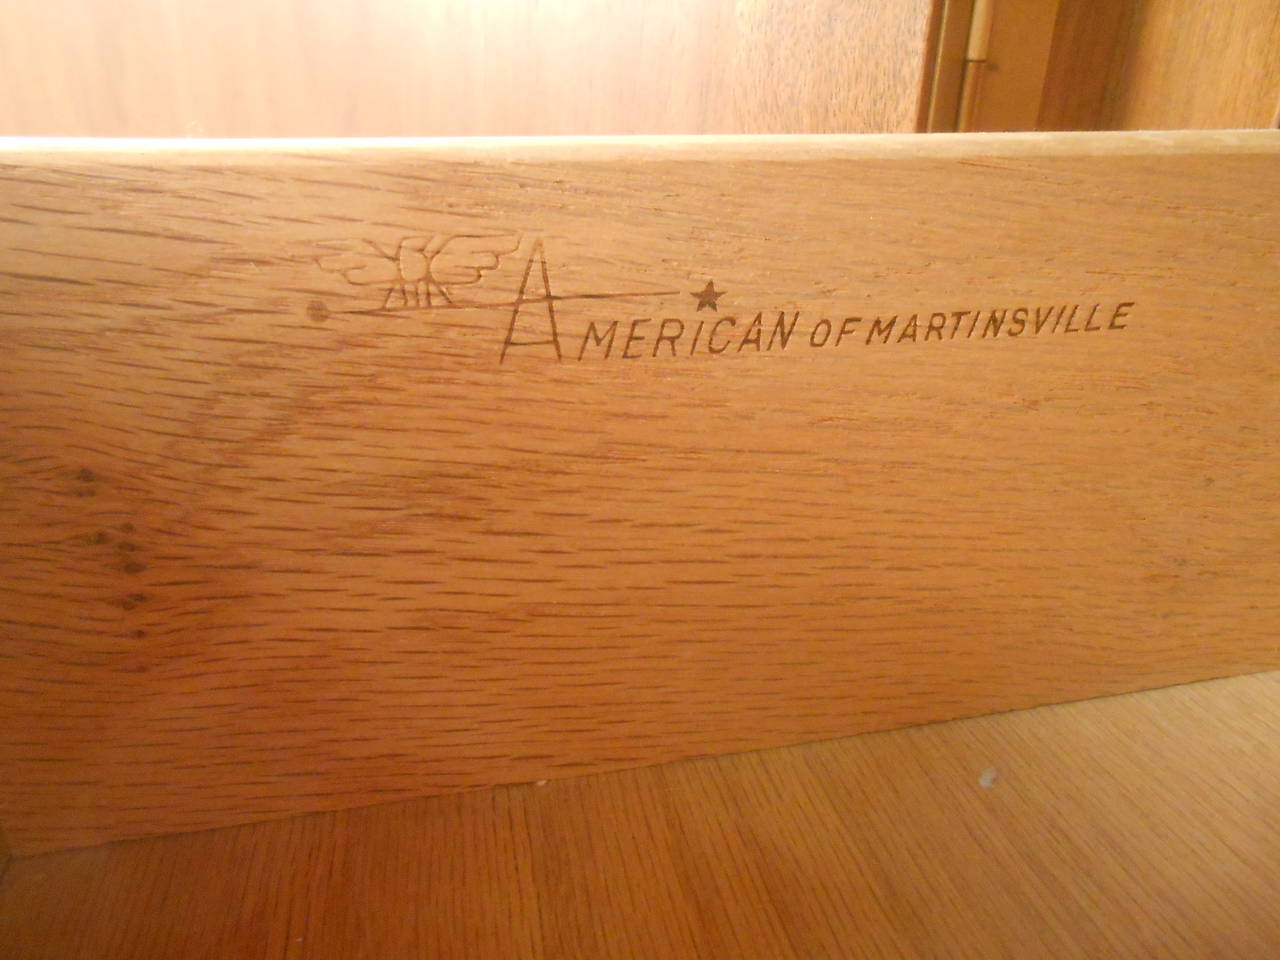 Cane American of Martinsville Gentleman's Chest